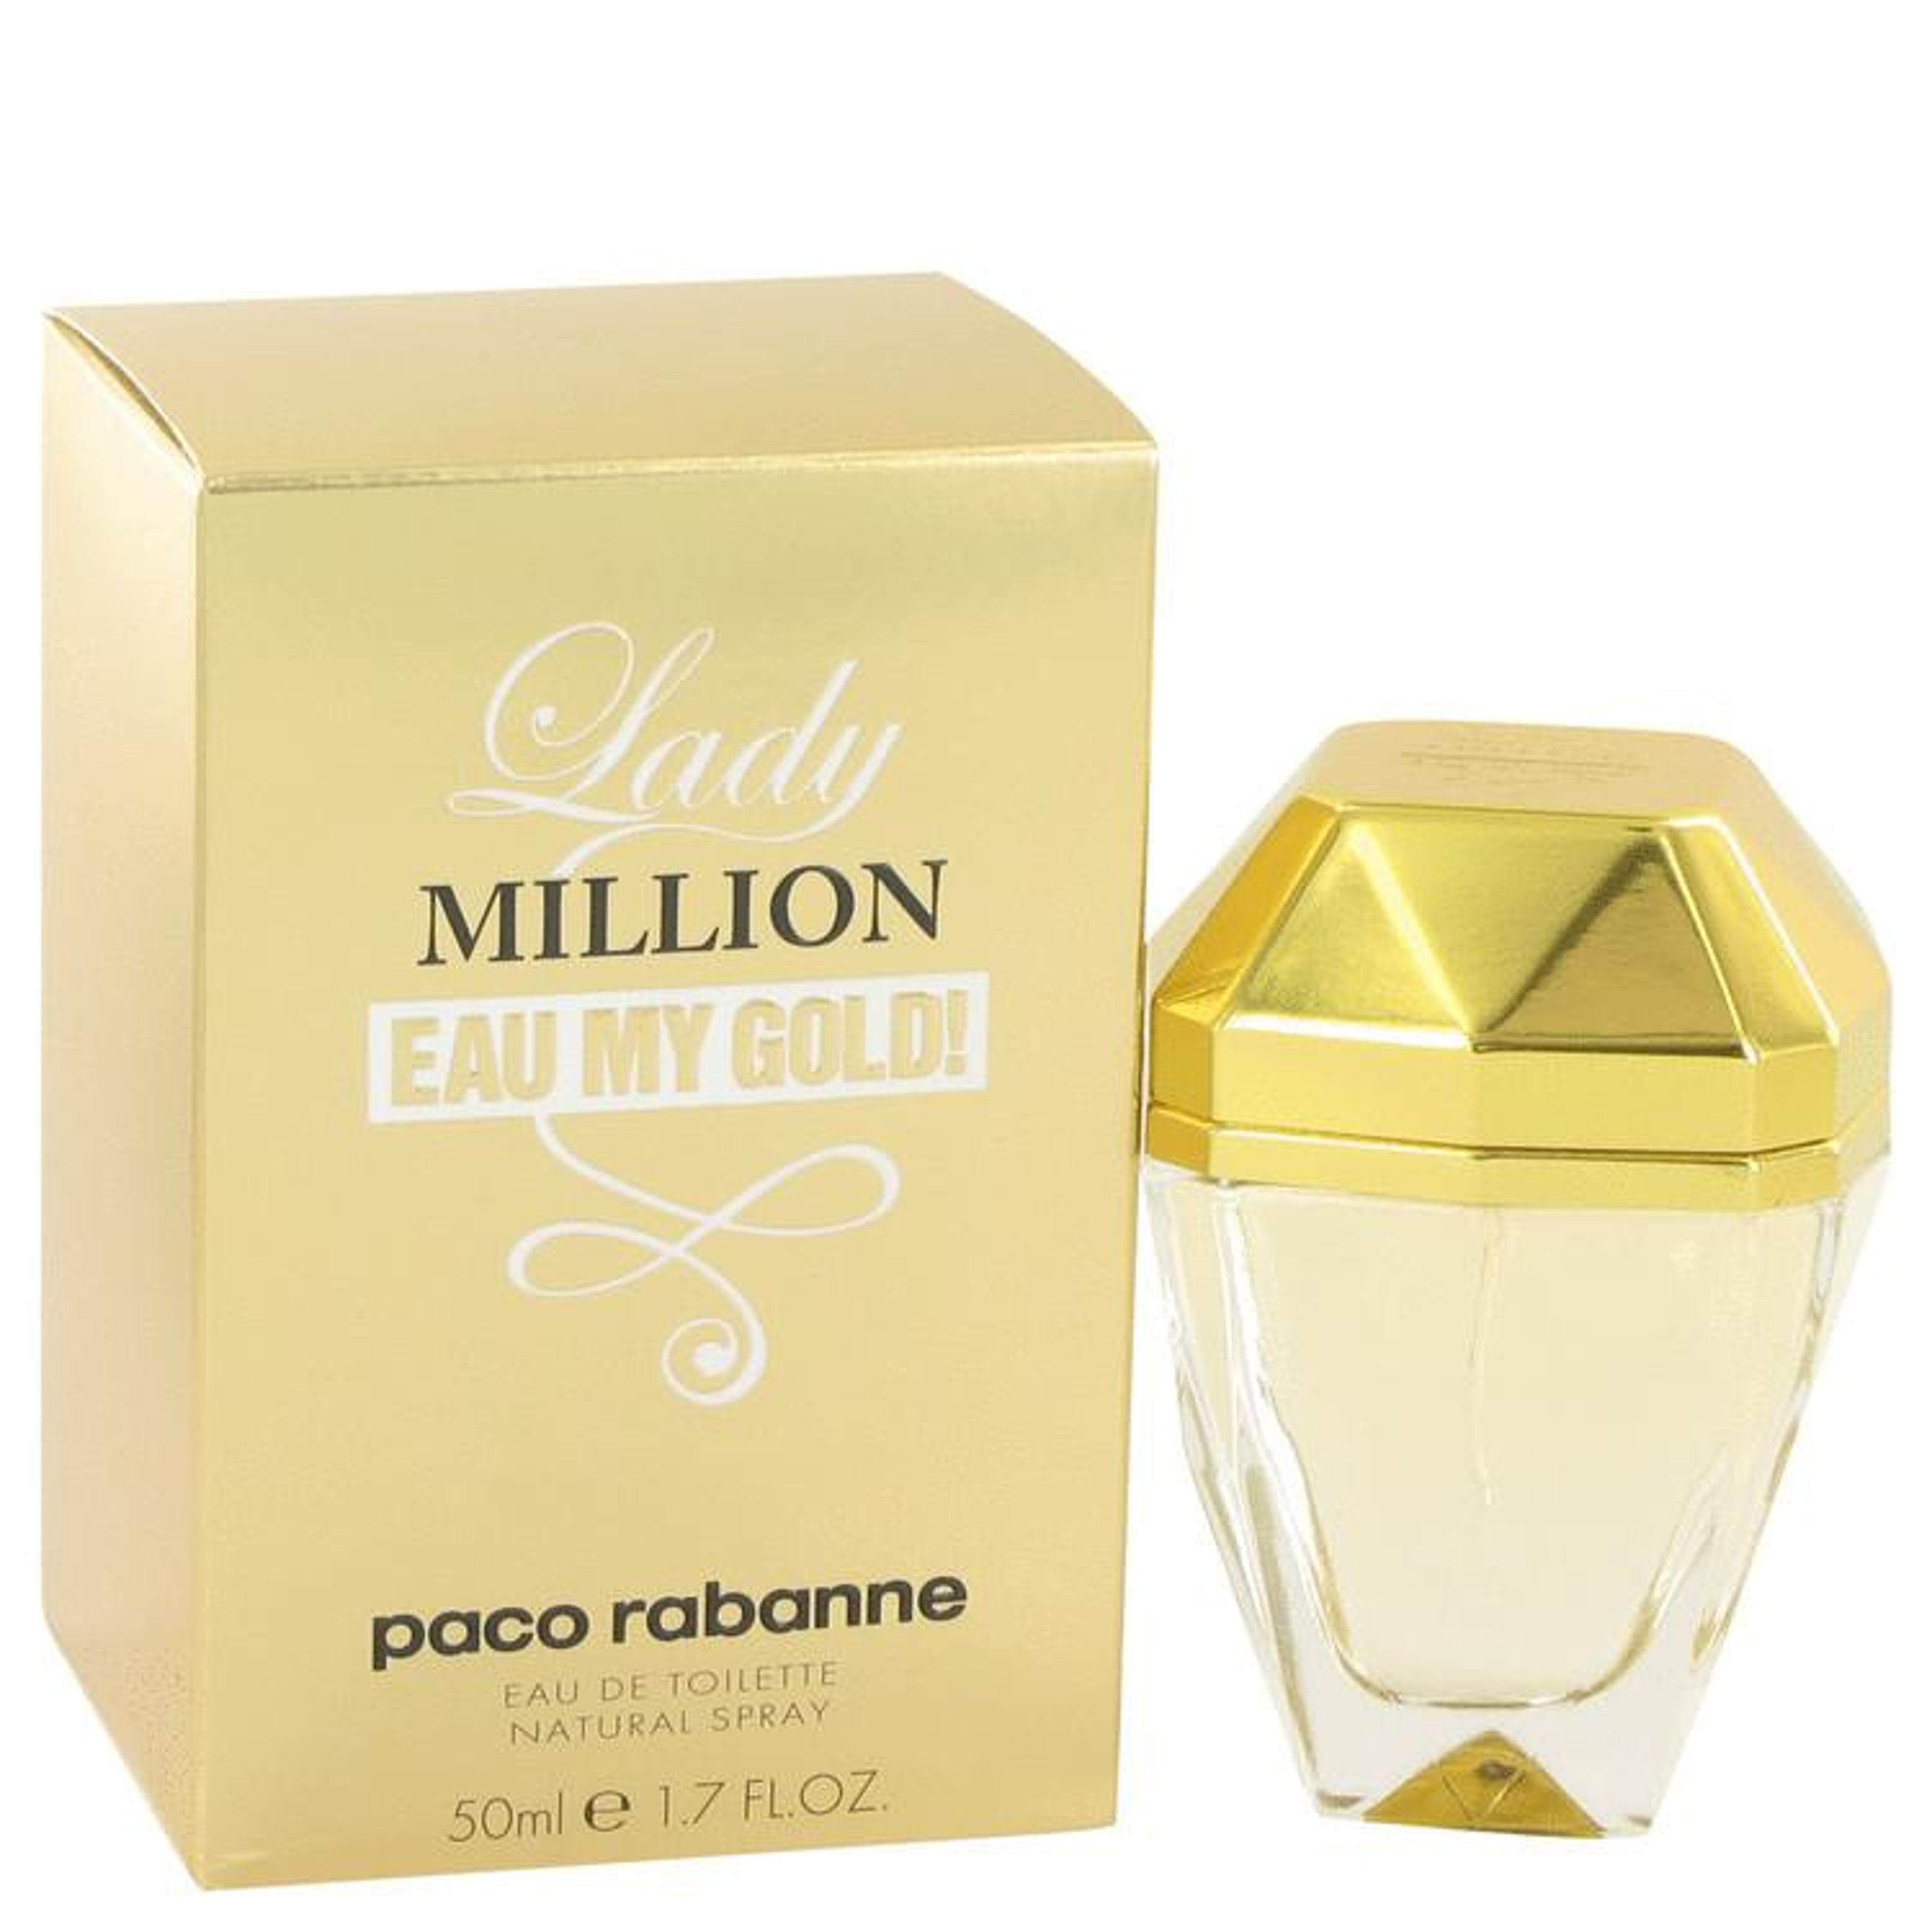 Rabanne Paco  Lady Million Eau My Gold By Paco  Eau De Toilette Spray 1.7 oz